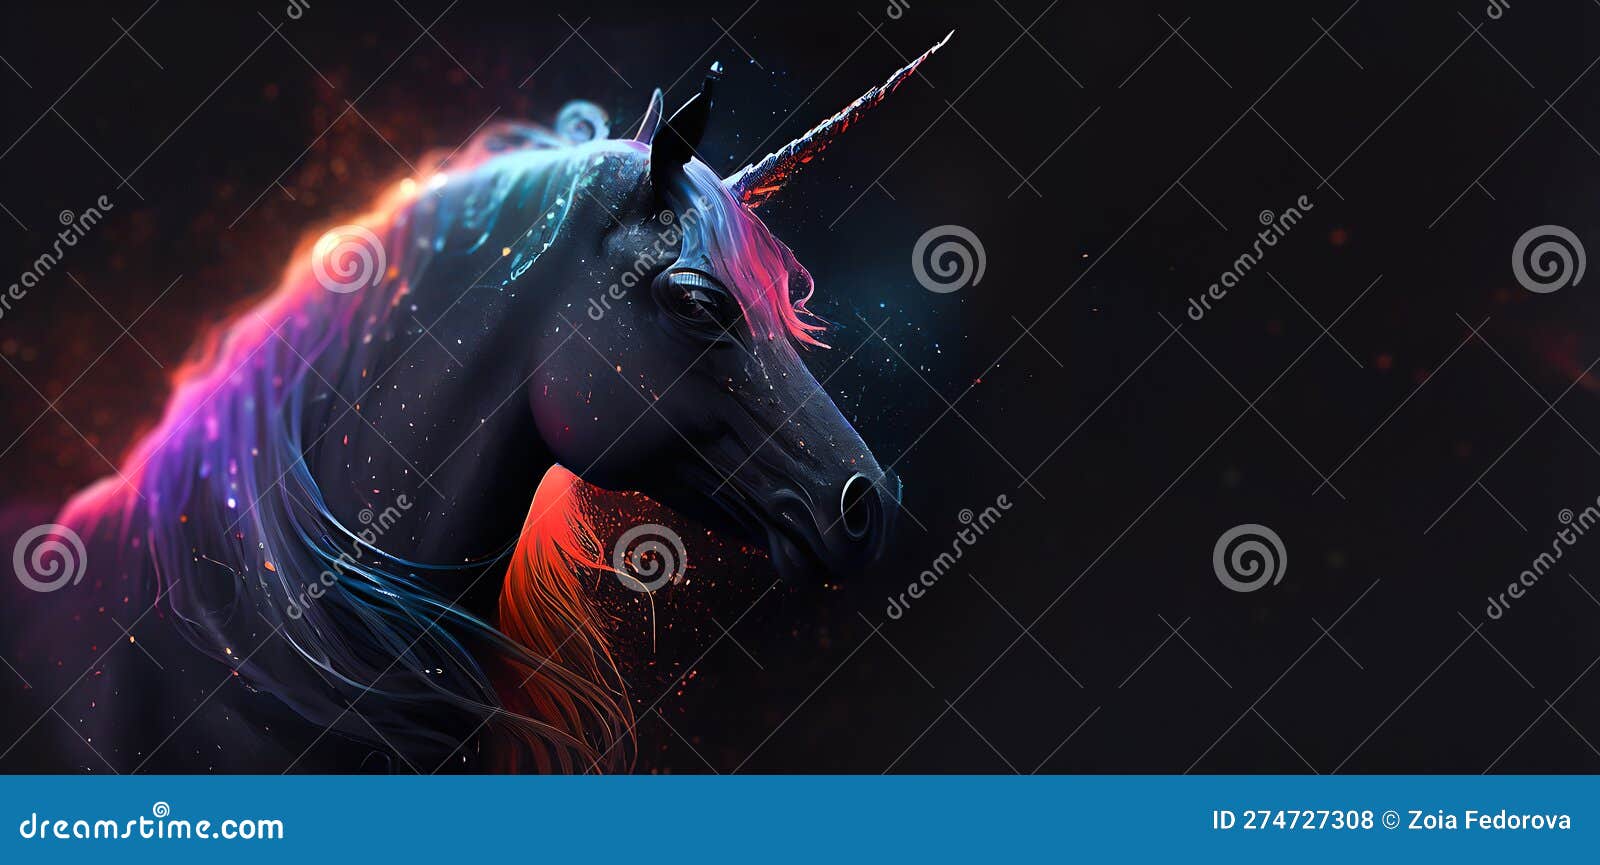 5. Unicorn Glow in the Dark Nail Art Stickers - wide 5